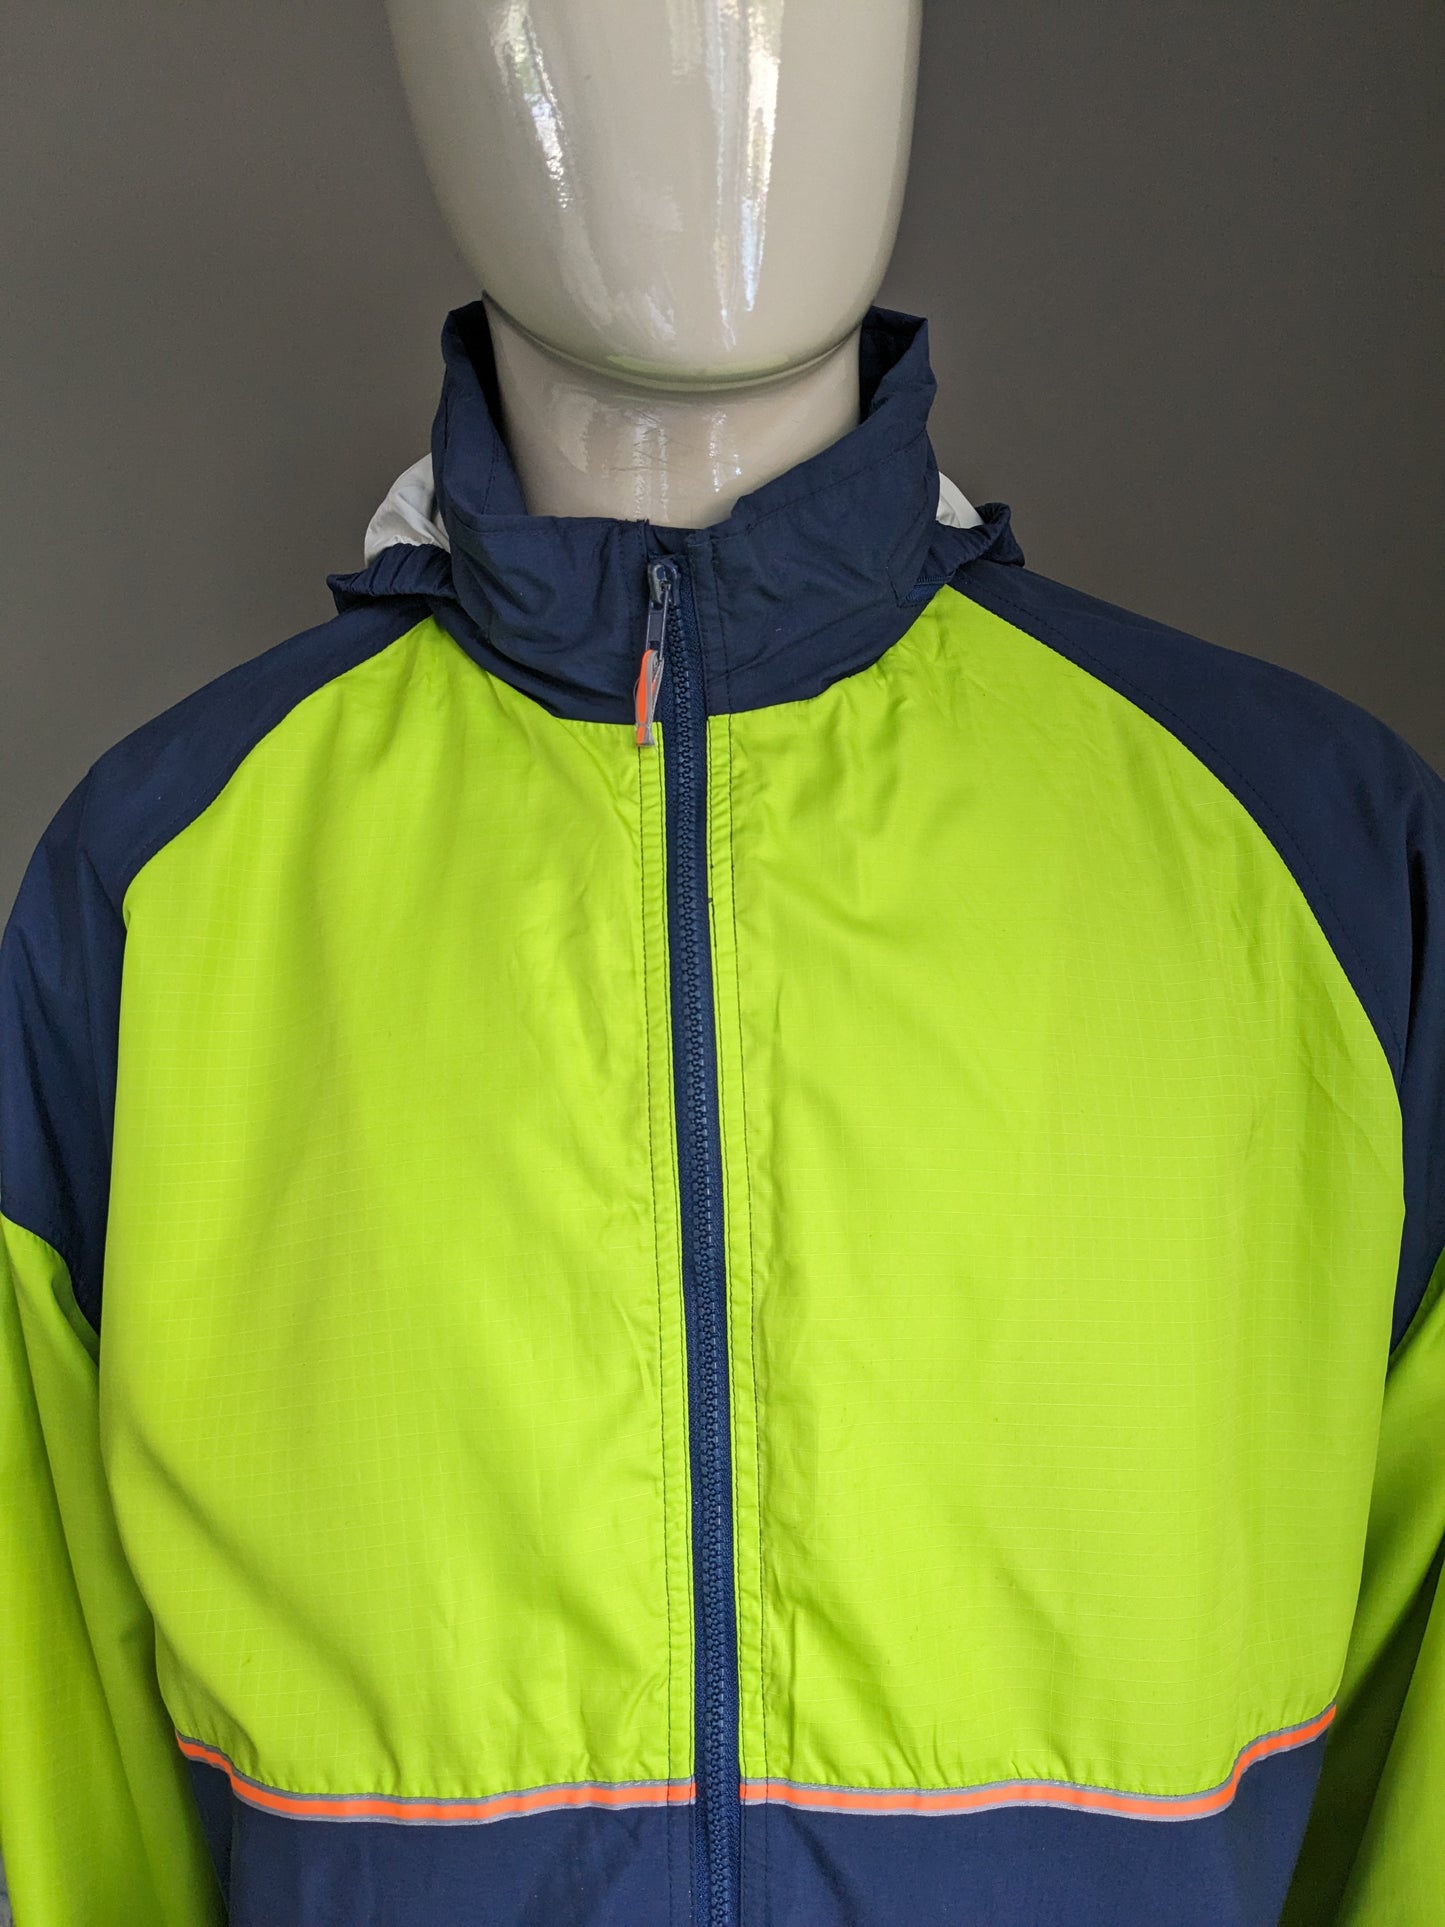 Adidas "Delfi 1000" Jacke / Jack. Gelbblau gefärbt. Größe xl.